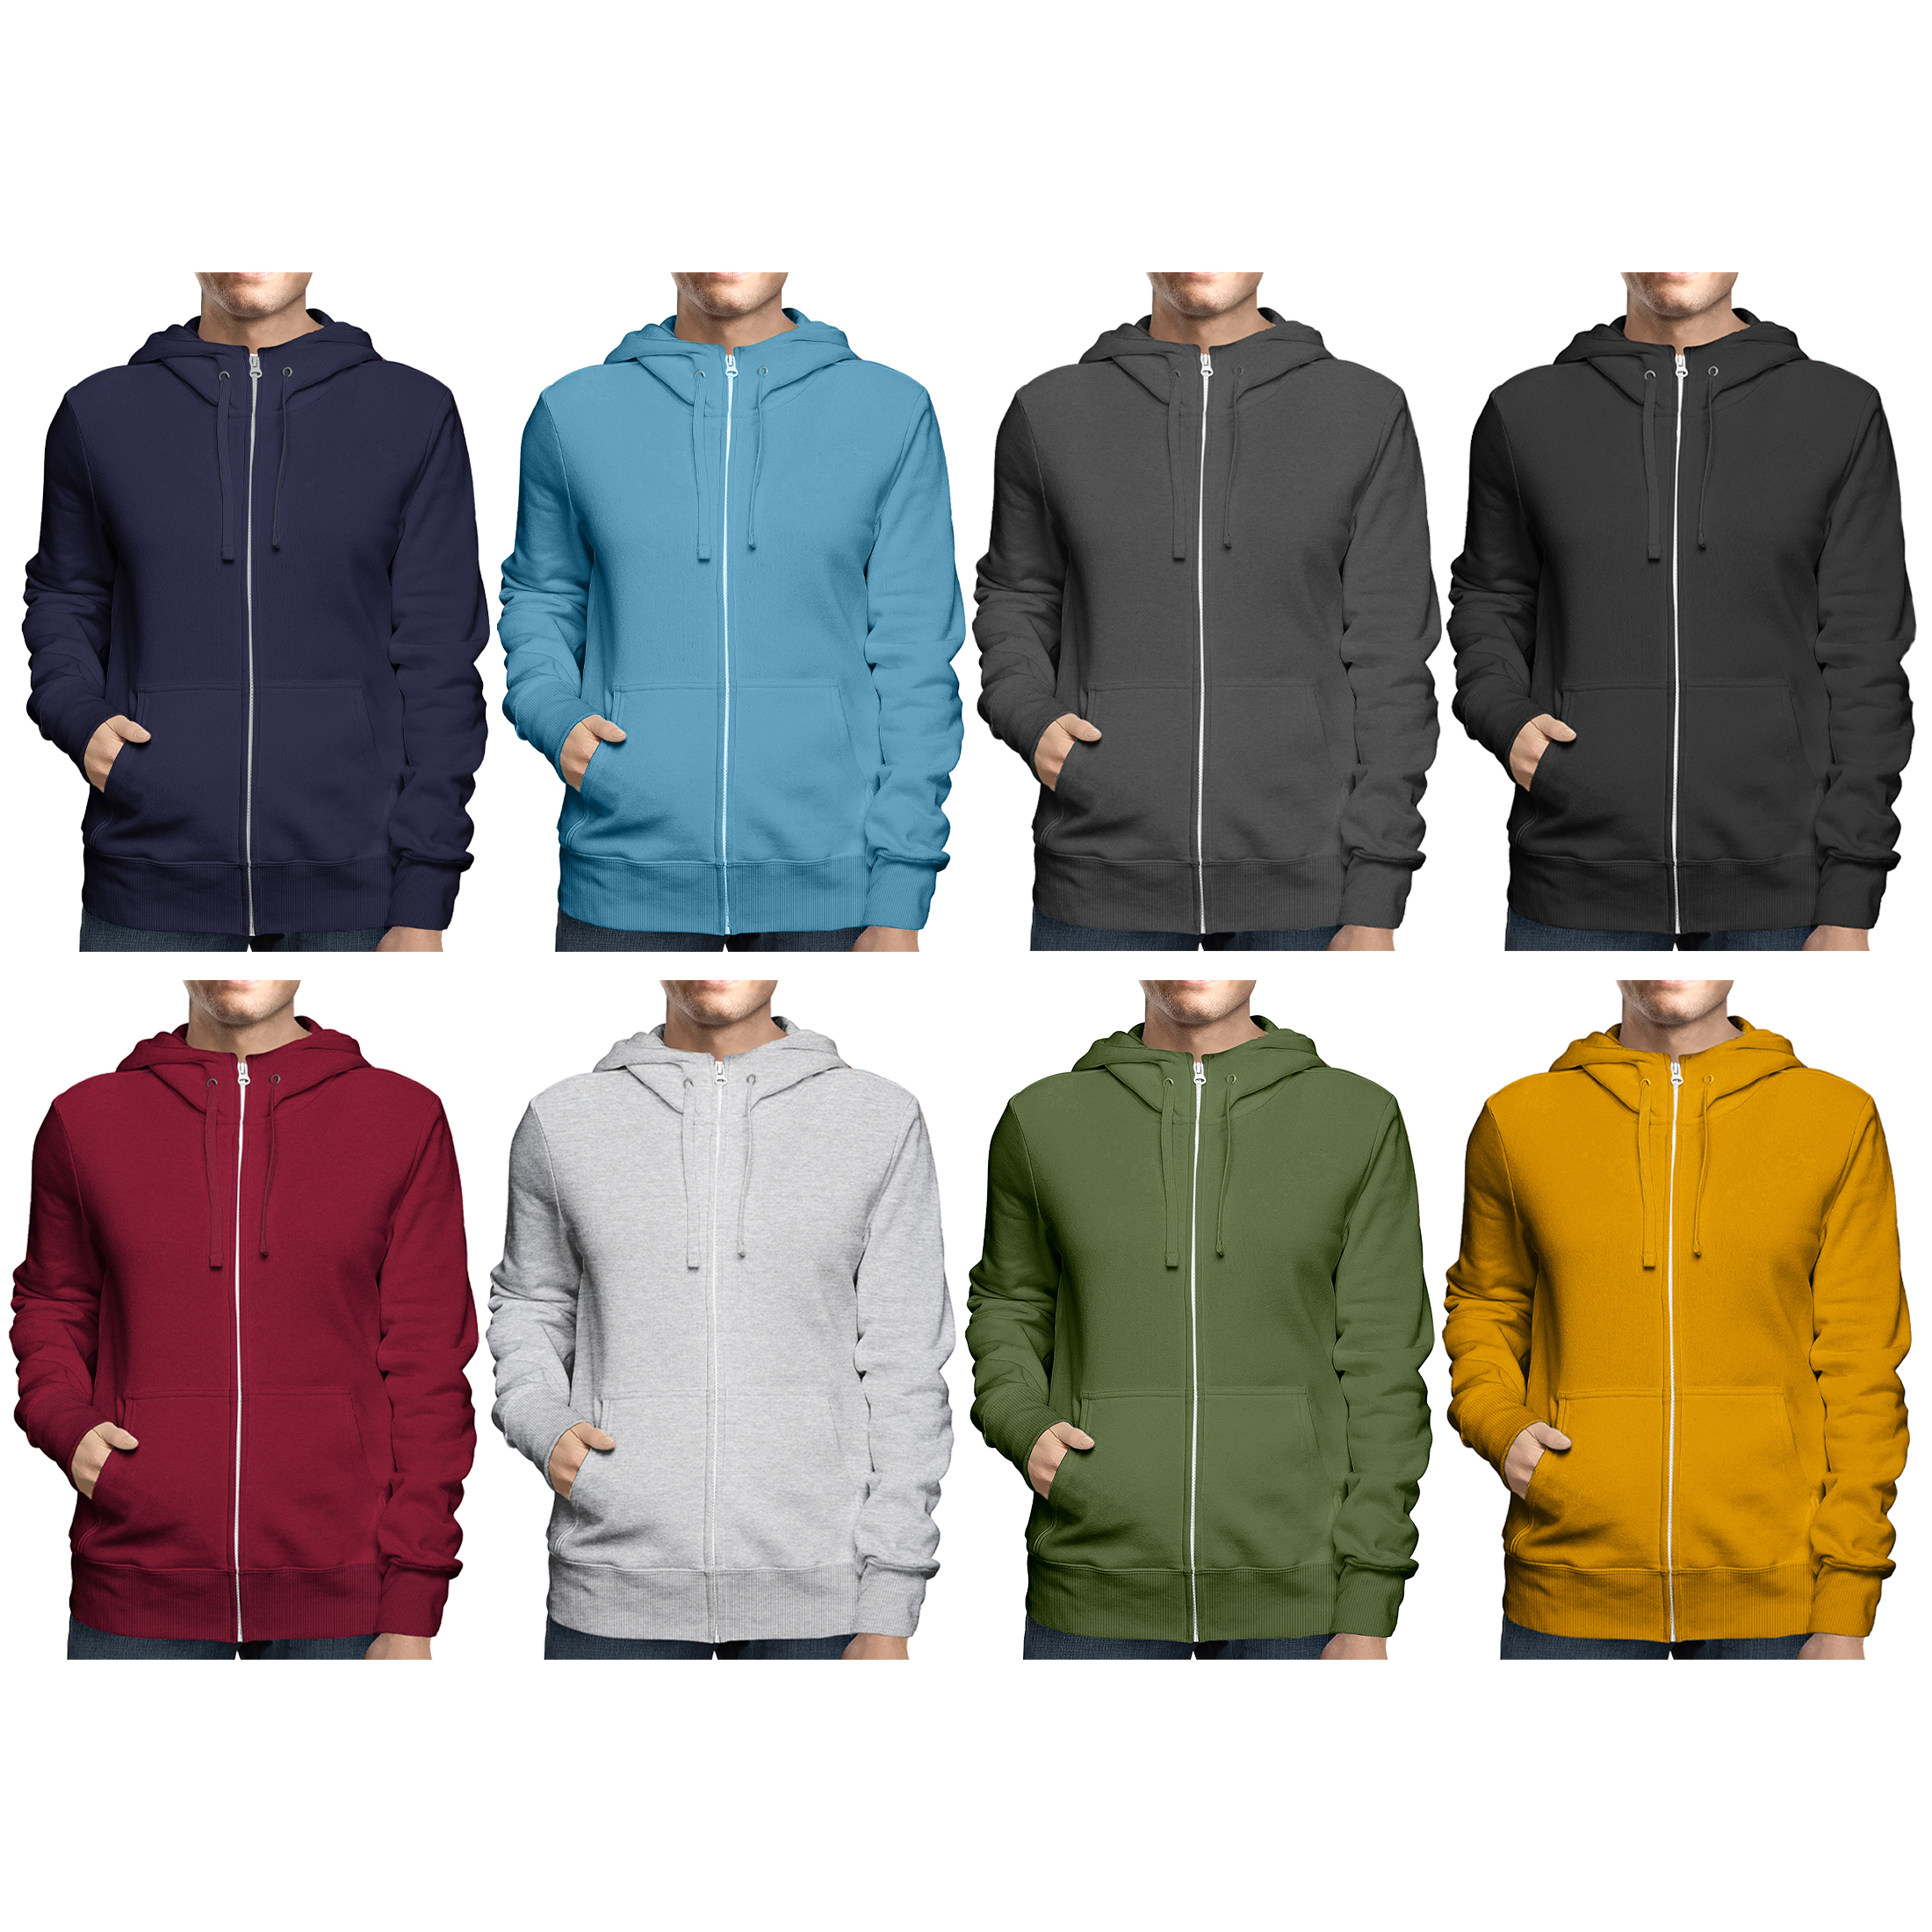 2-Pack: Men's Full Zip Up Fleece-Lined Hoodie Sweatshirt (Big & Tall Size Available) - Charcoal & Gray, Medium